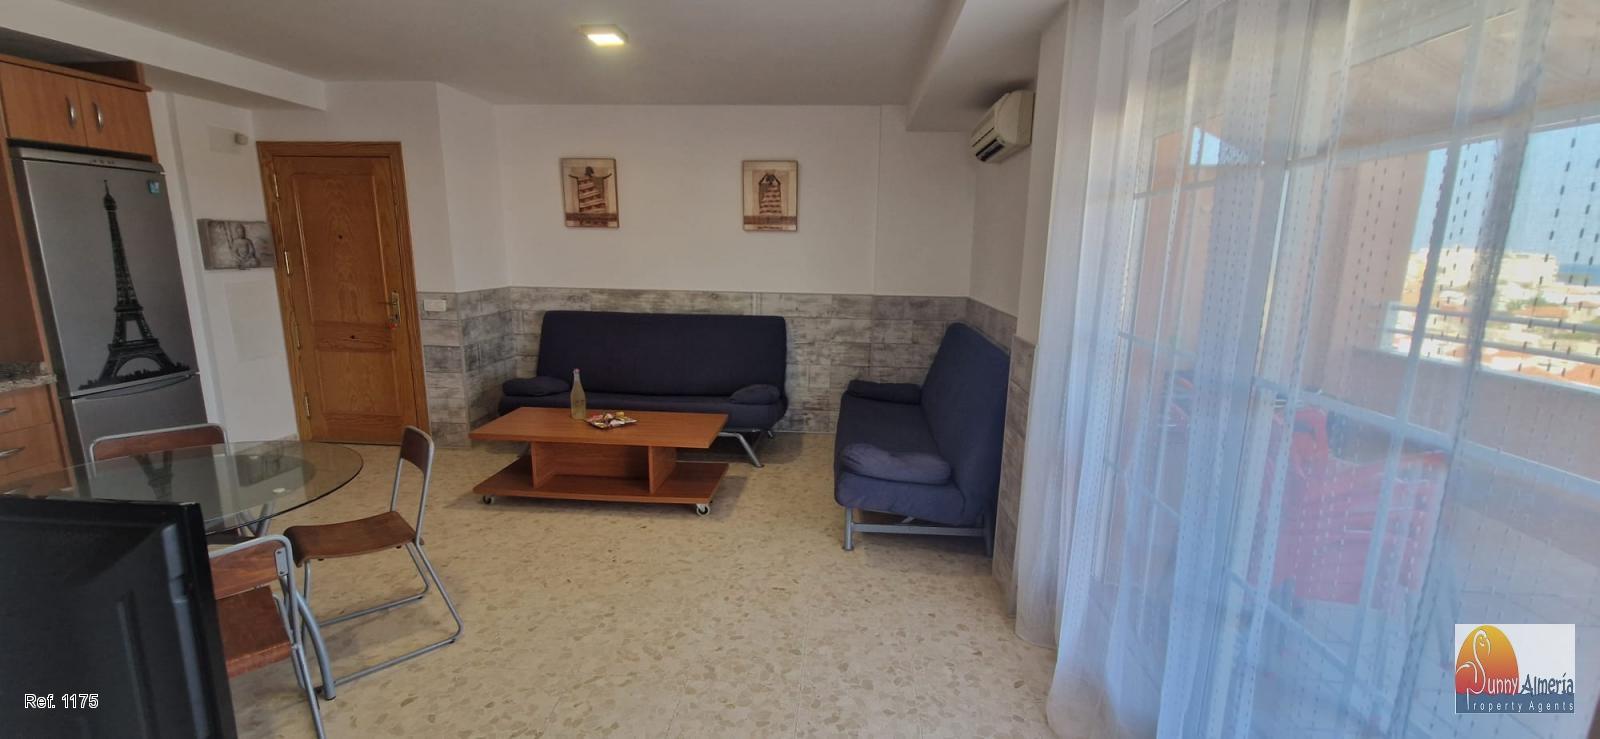 Apartment for rent in Avenida  Sabinal 1 (Roquetas de Mar), 650 €/month